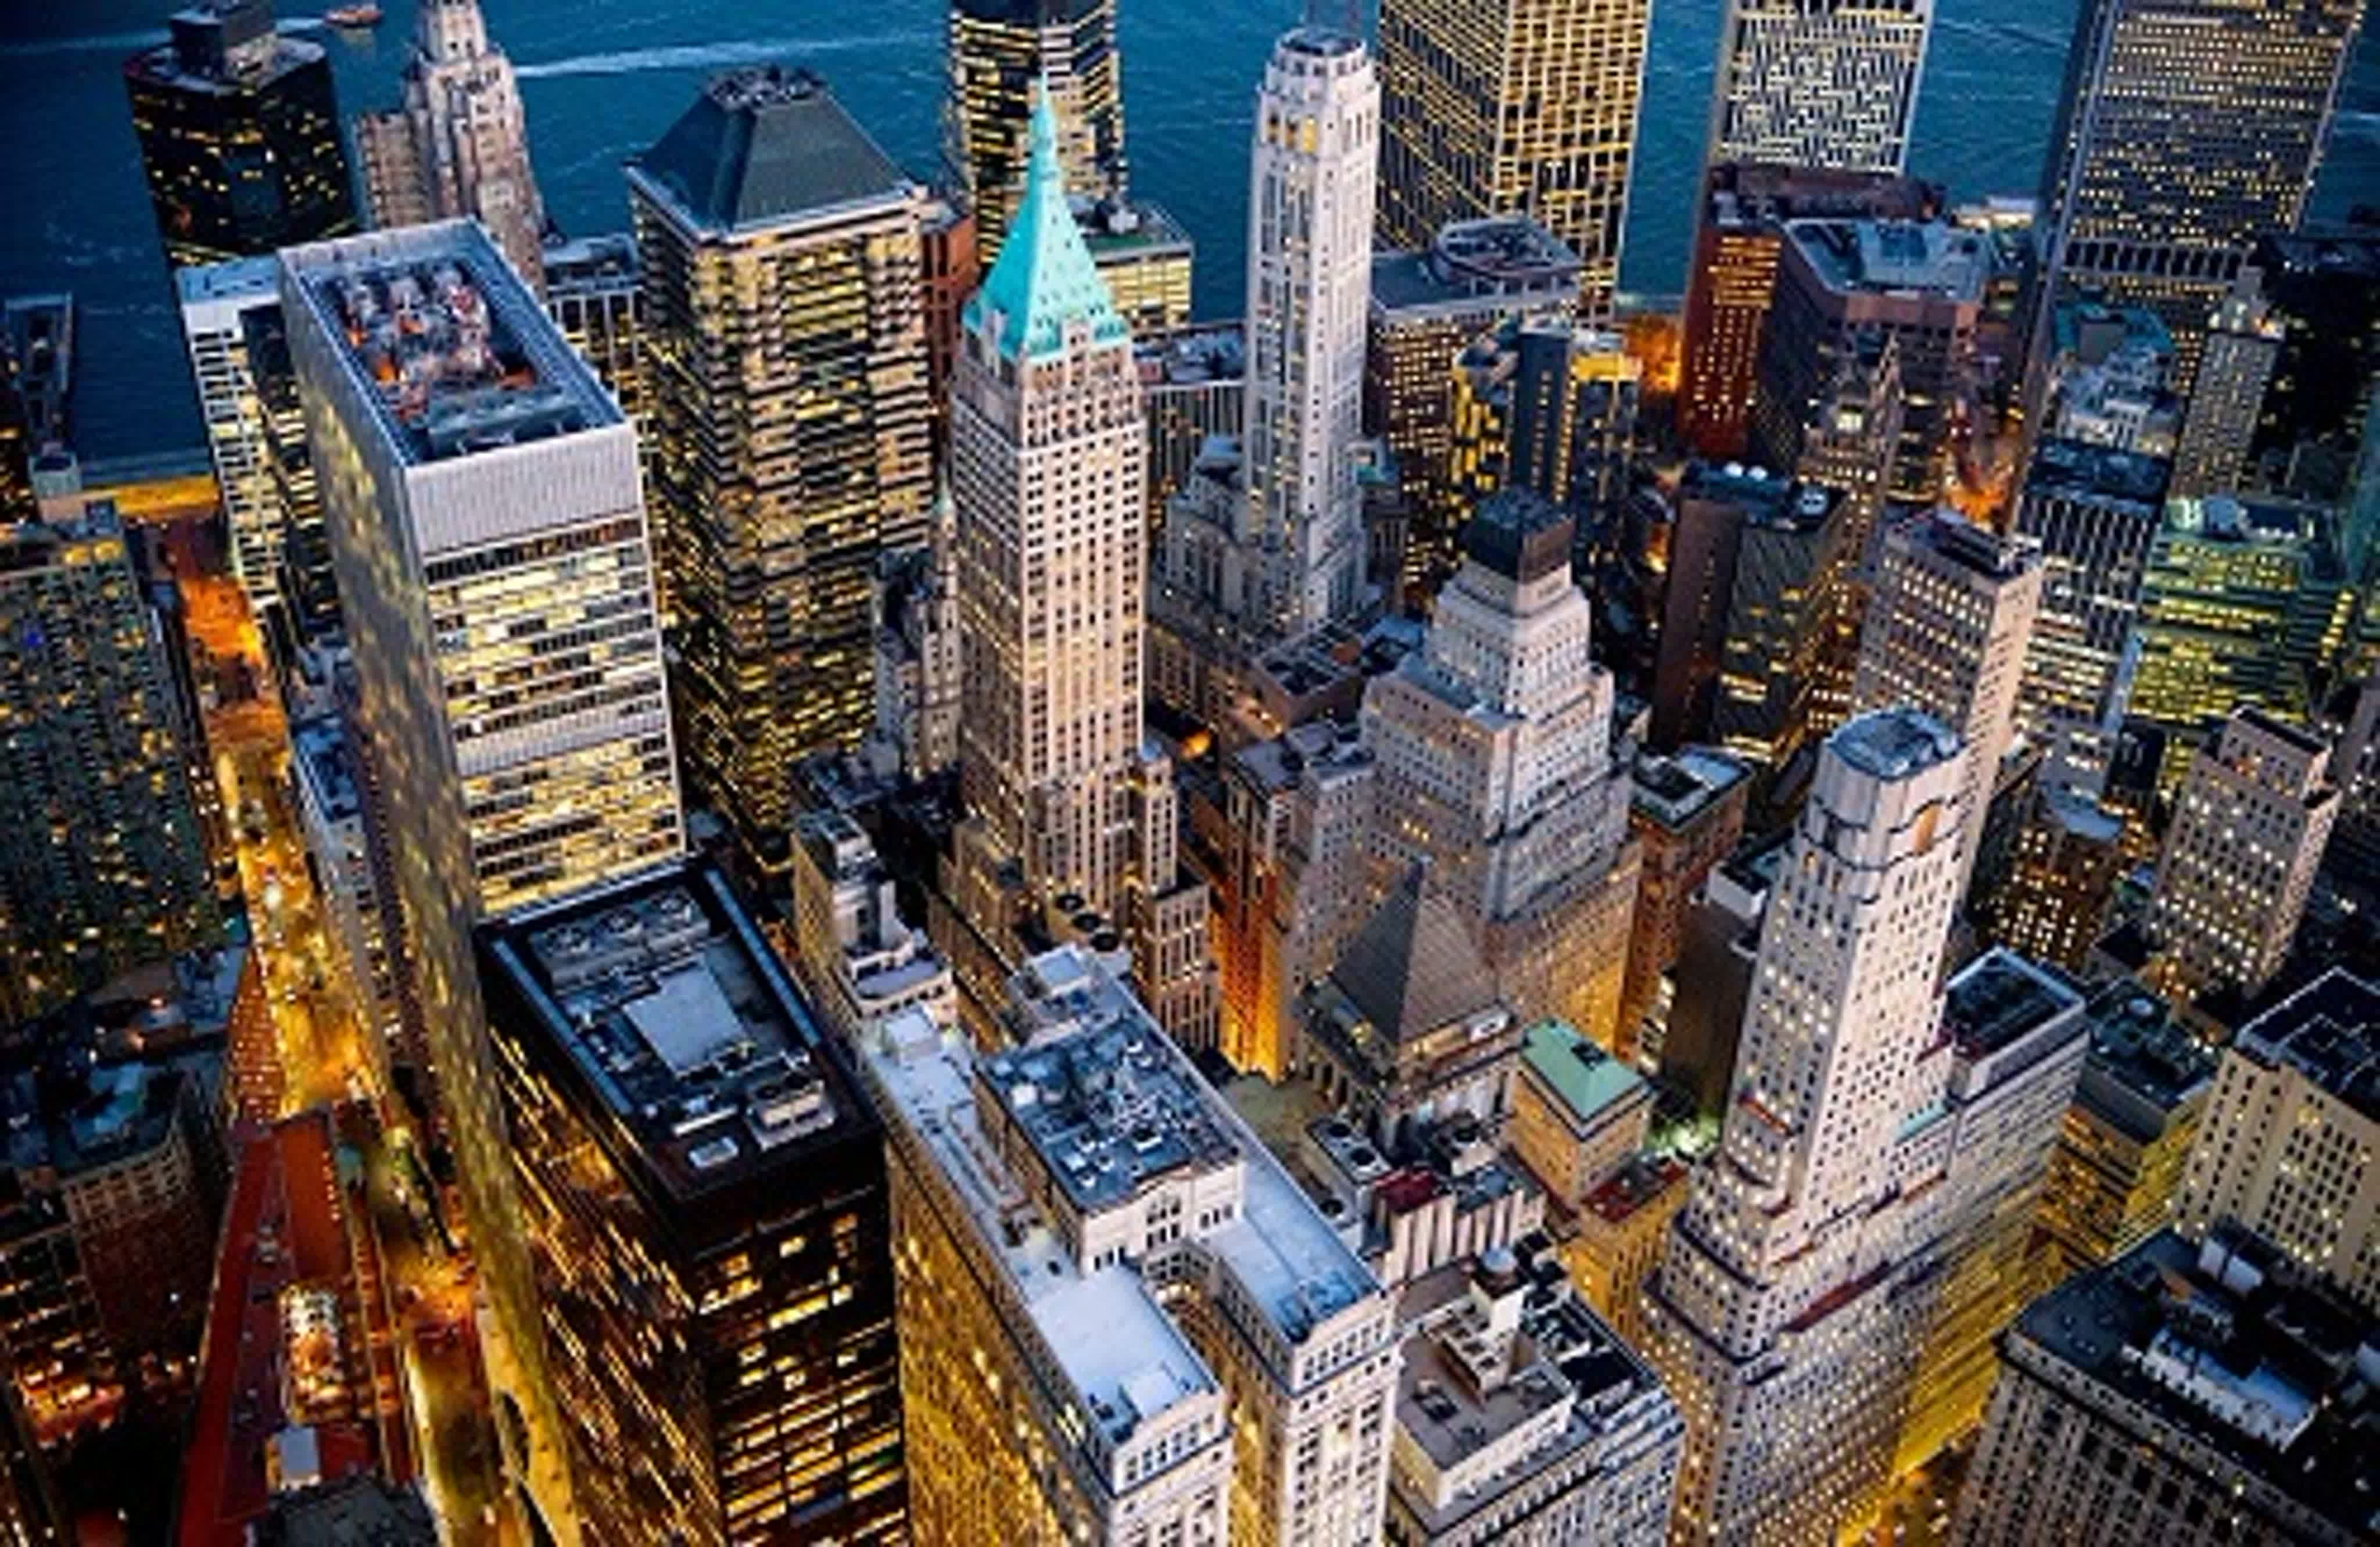 New york 3. Нью-Йорк. Нью-Йорк (New York City). Нью Йорк с высоты птичего полёта. Высотки Нью-Йорка.